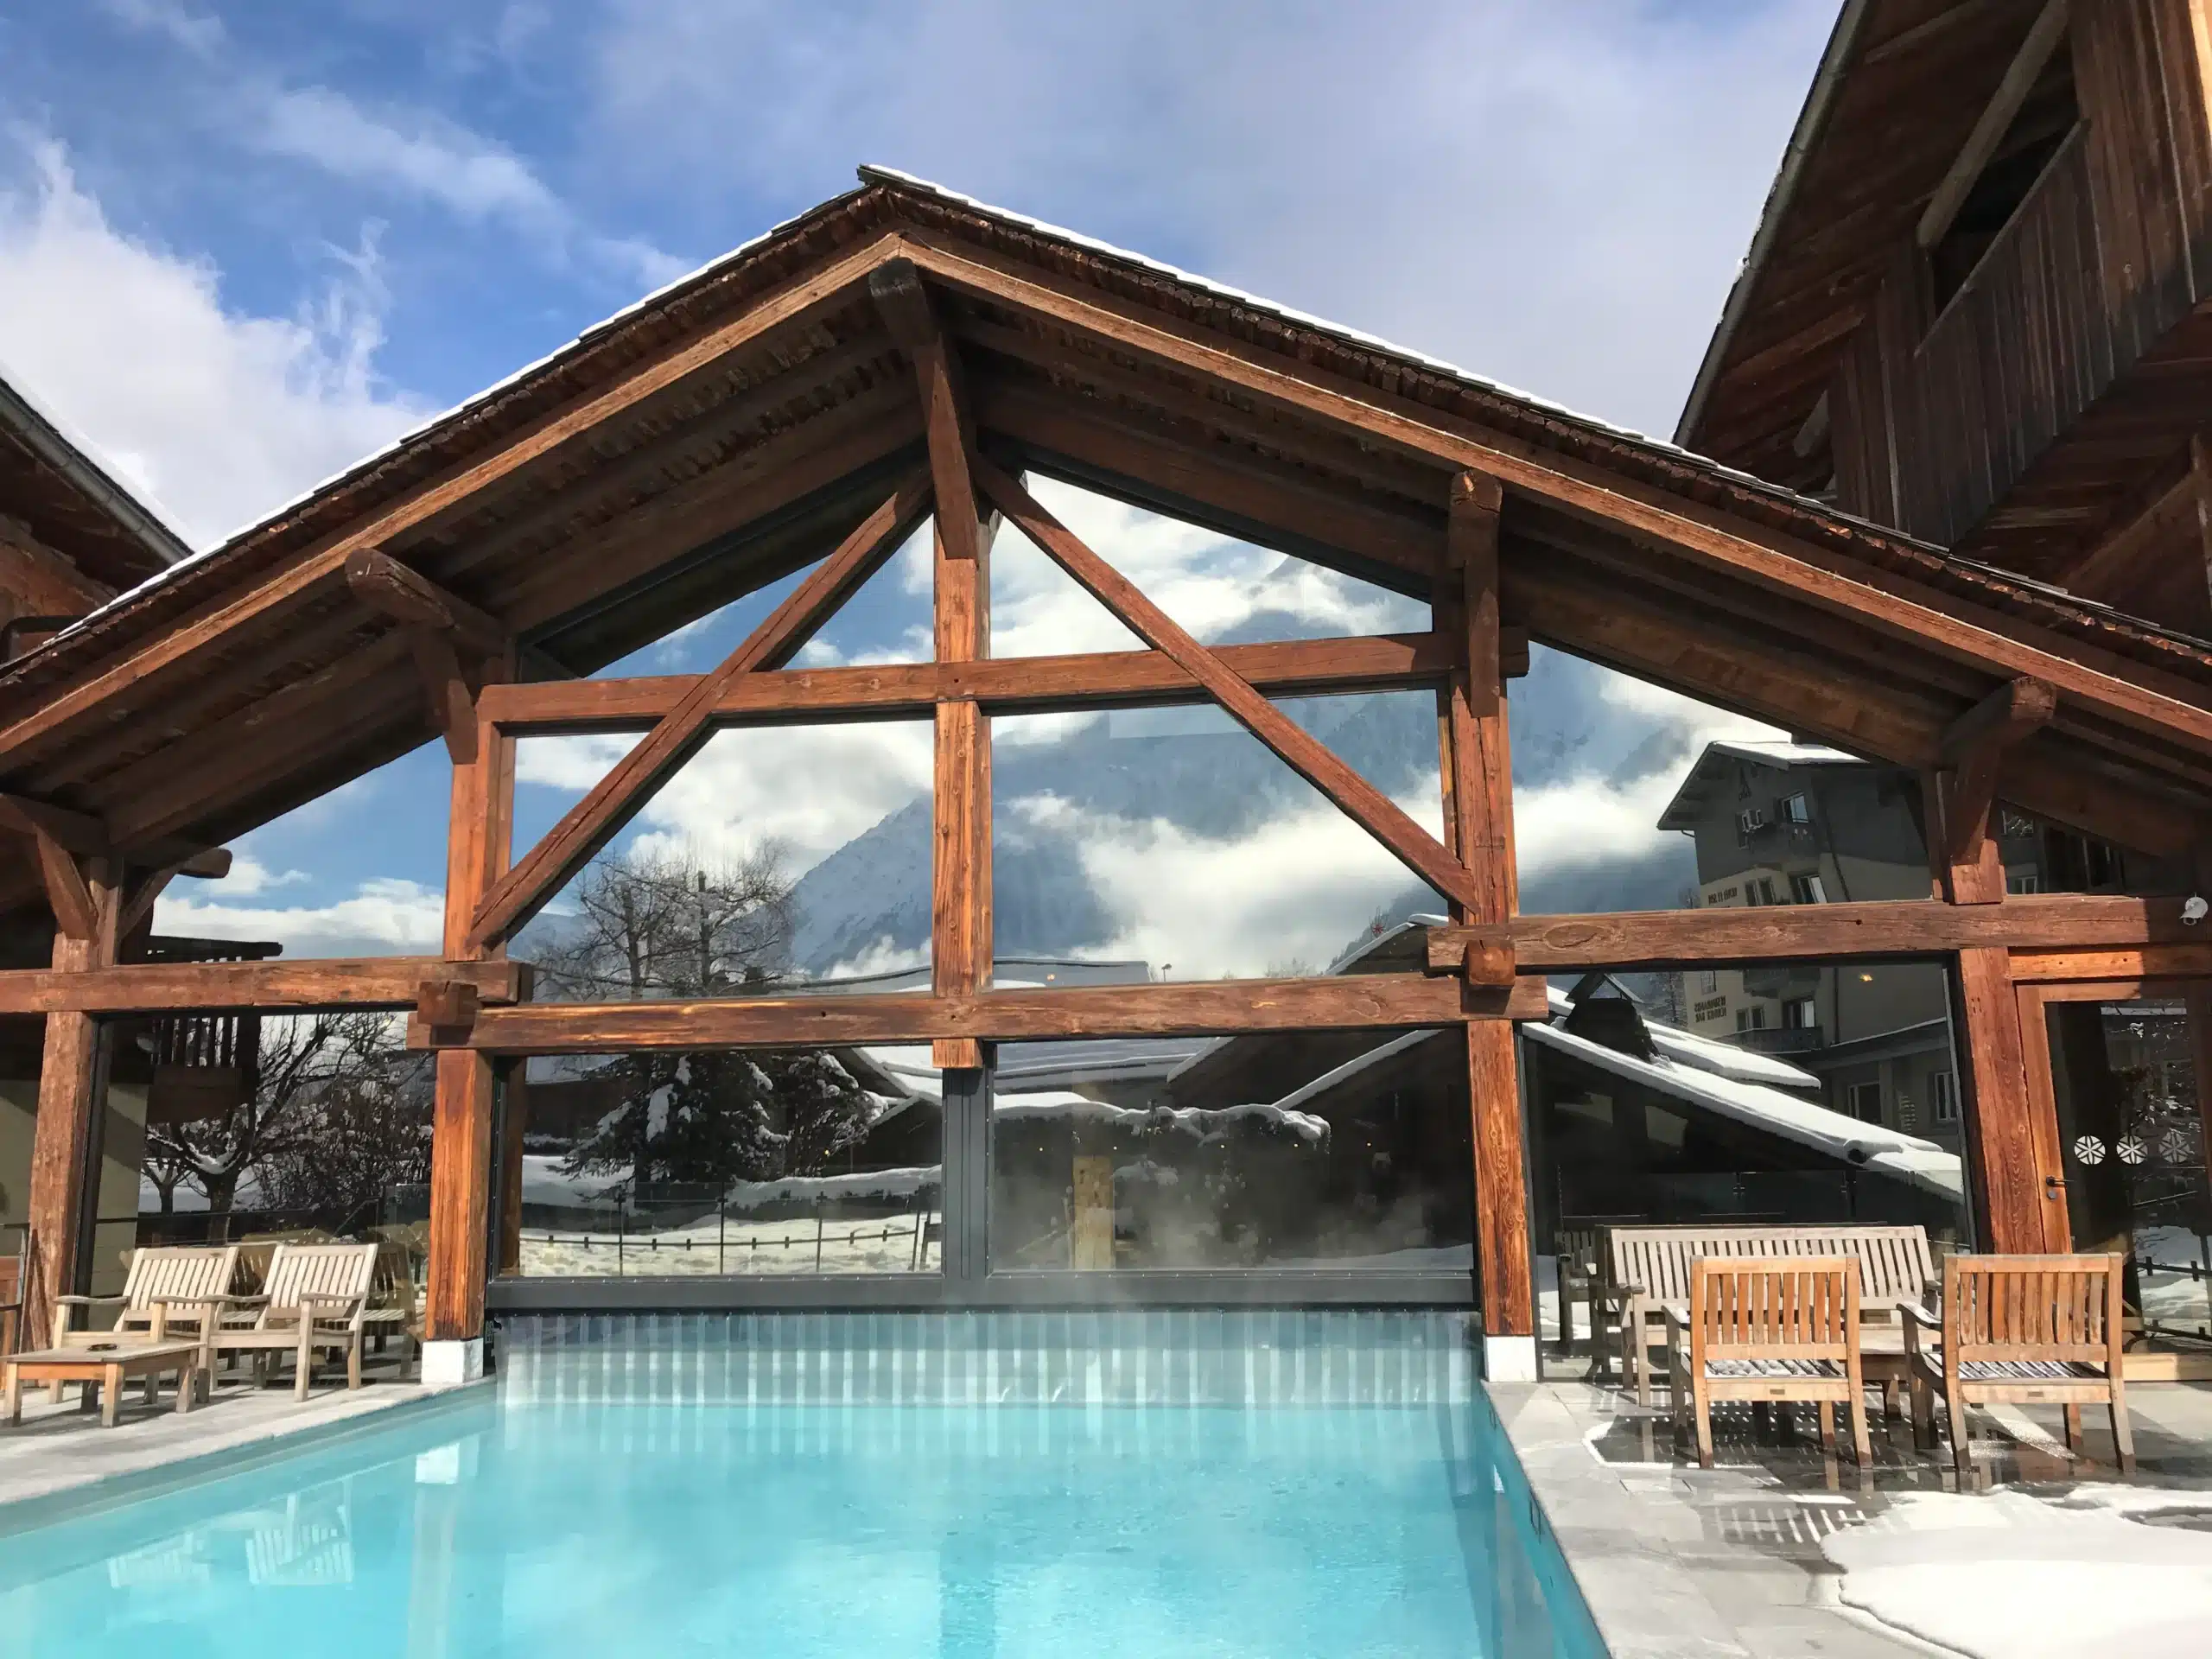 hamonix - the dream spa hotels for a relaxing getaway - Hameau Albert premier